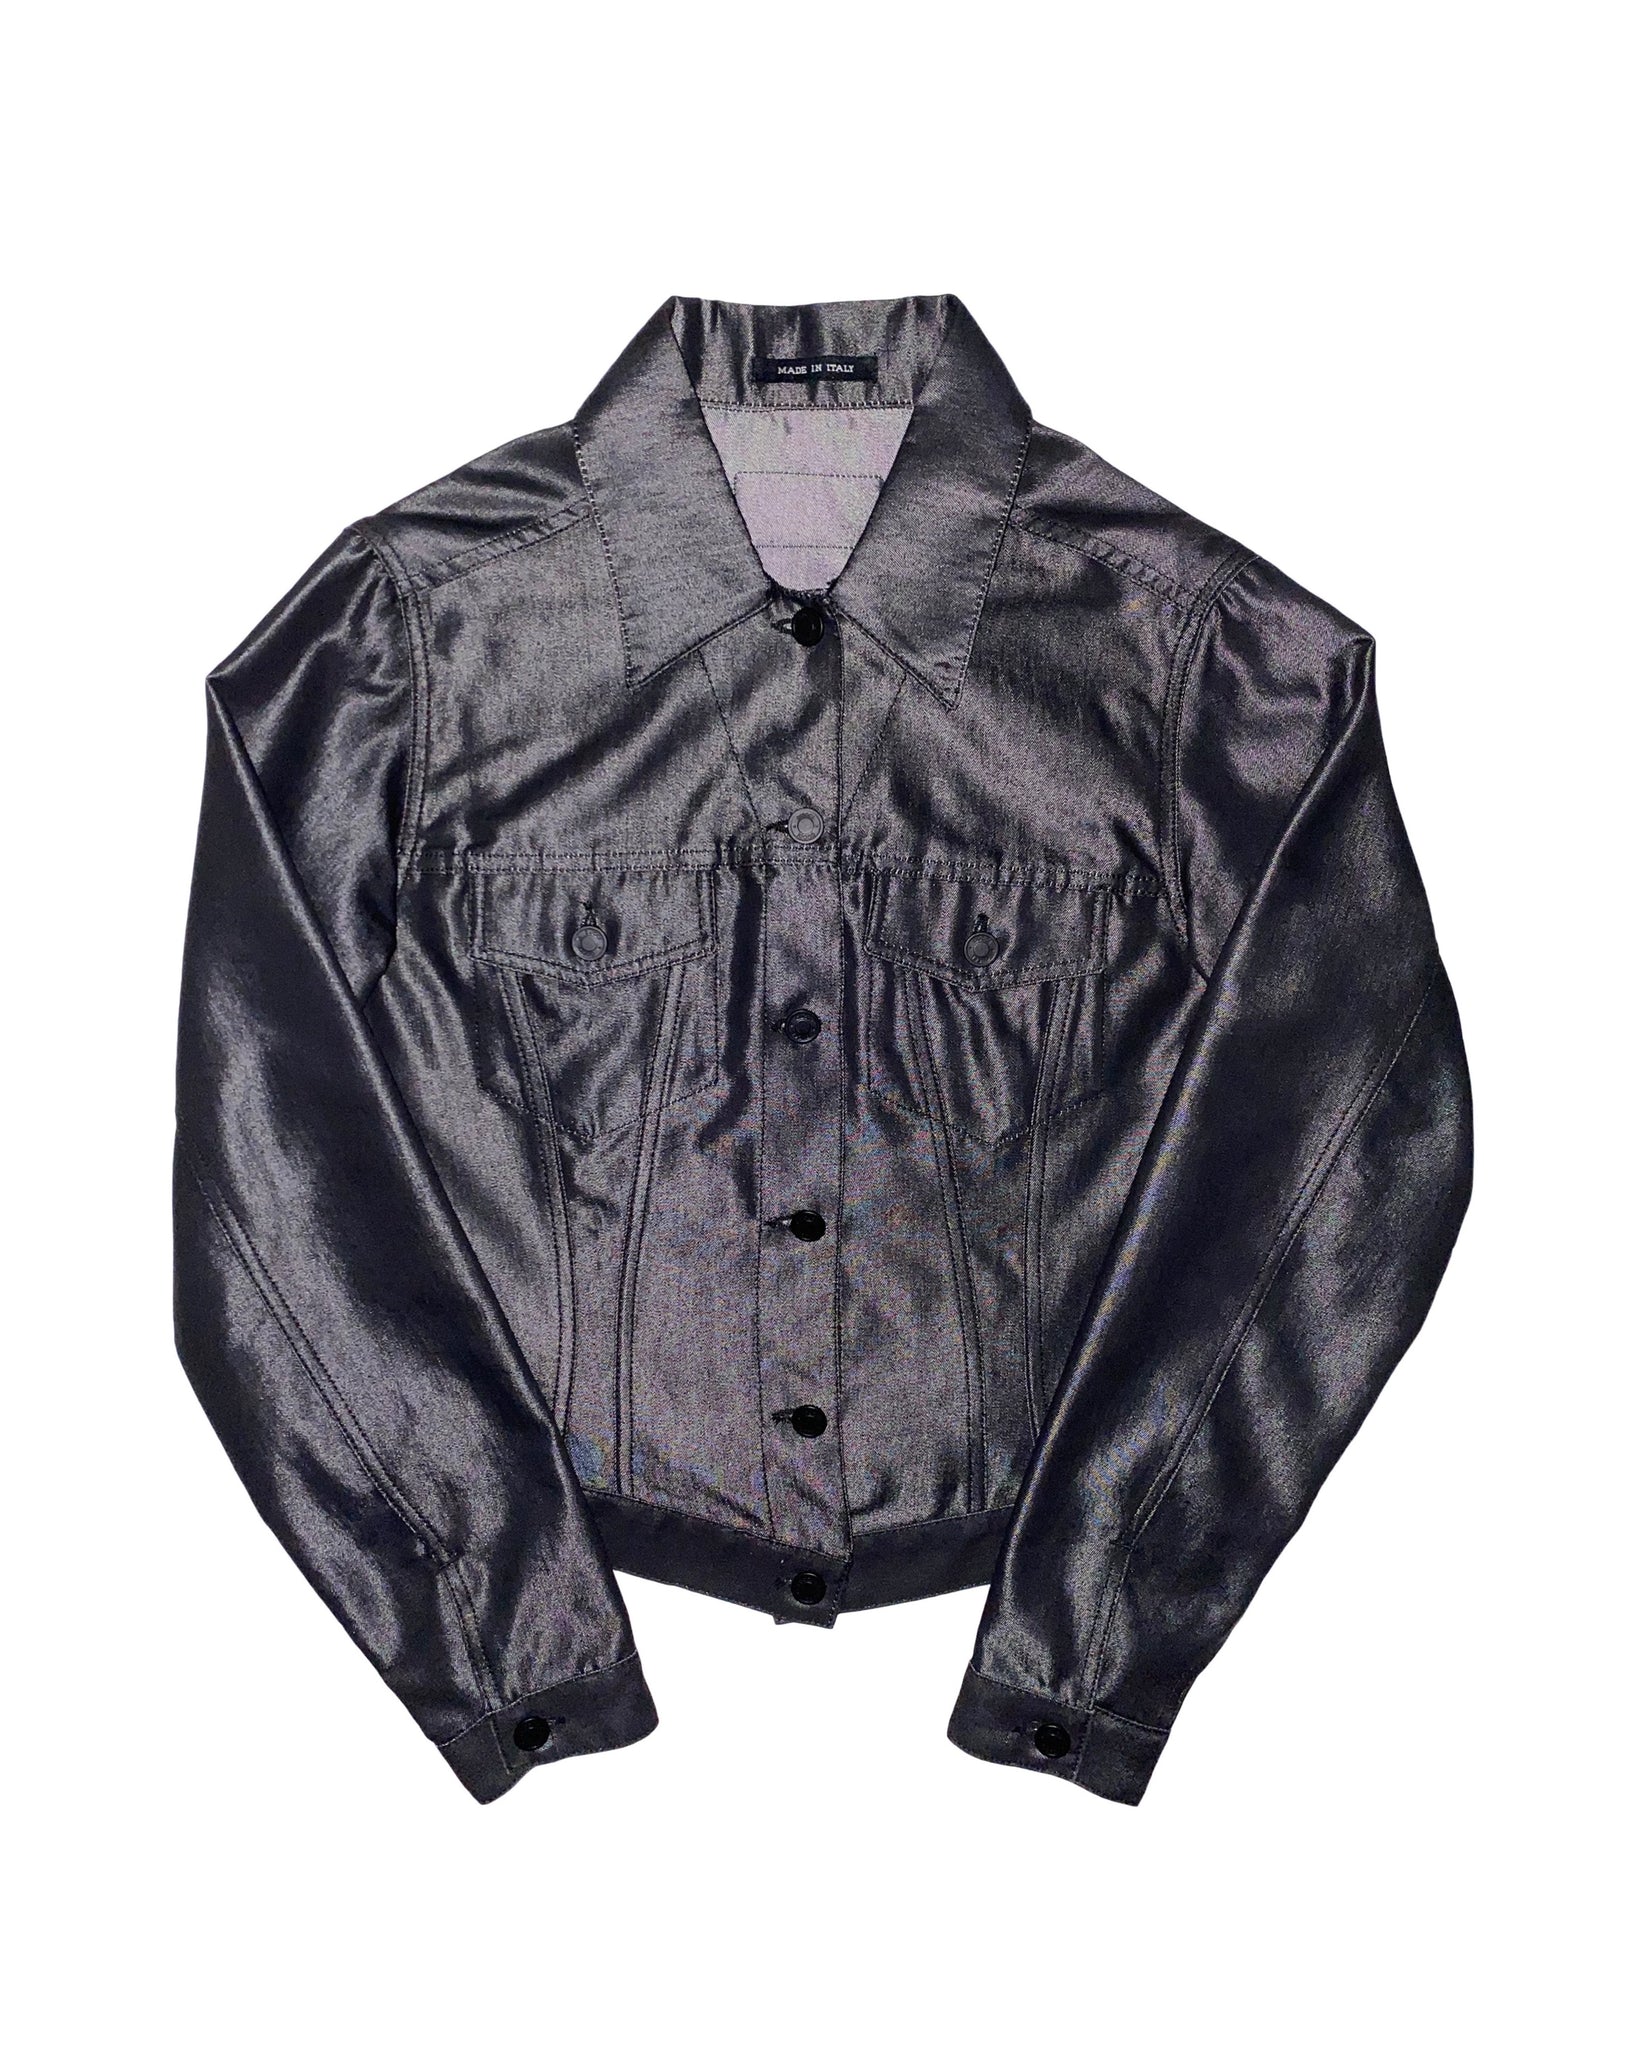 Gucci Jackets for Men, Denim & Leather